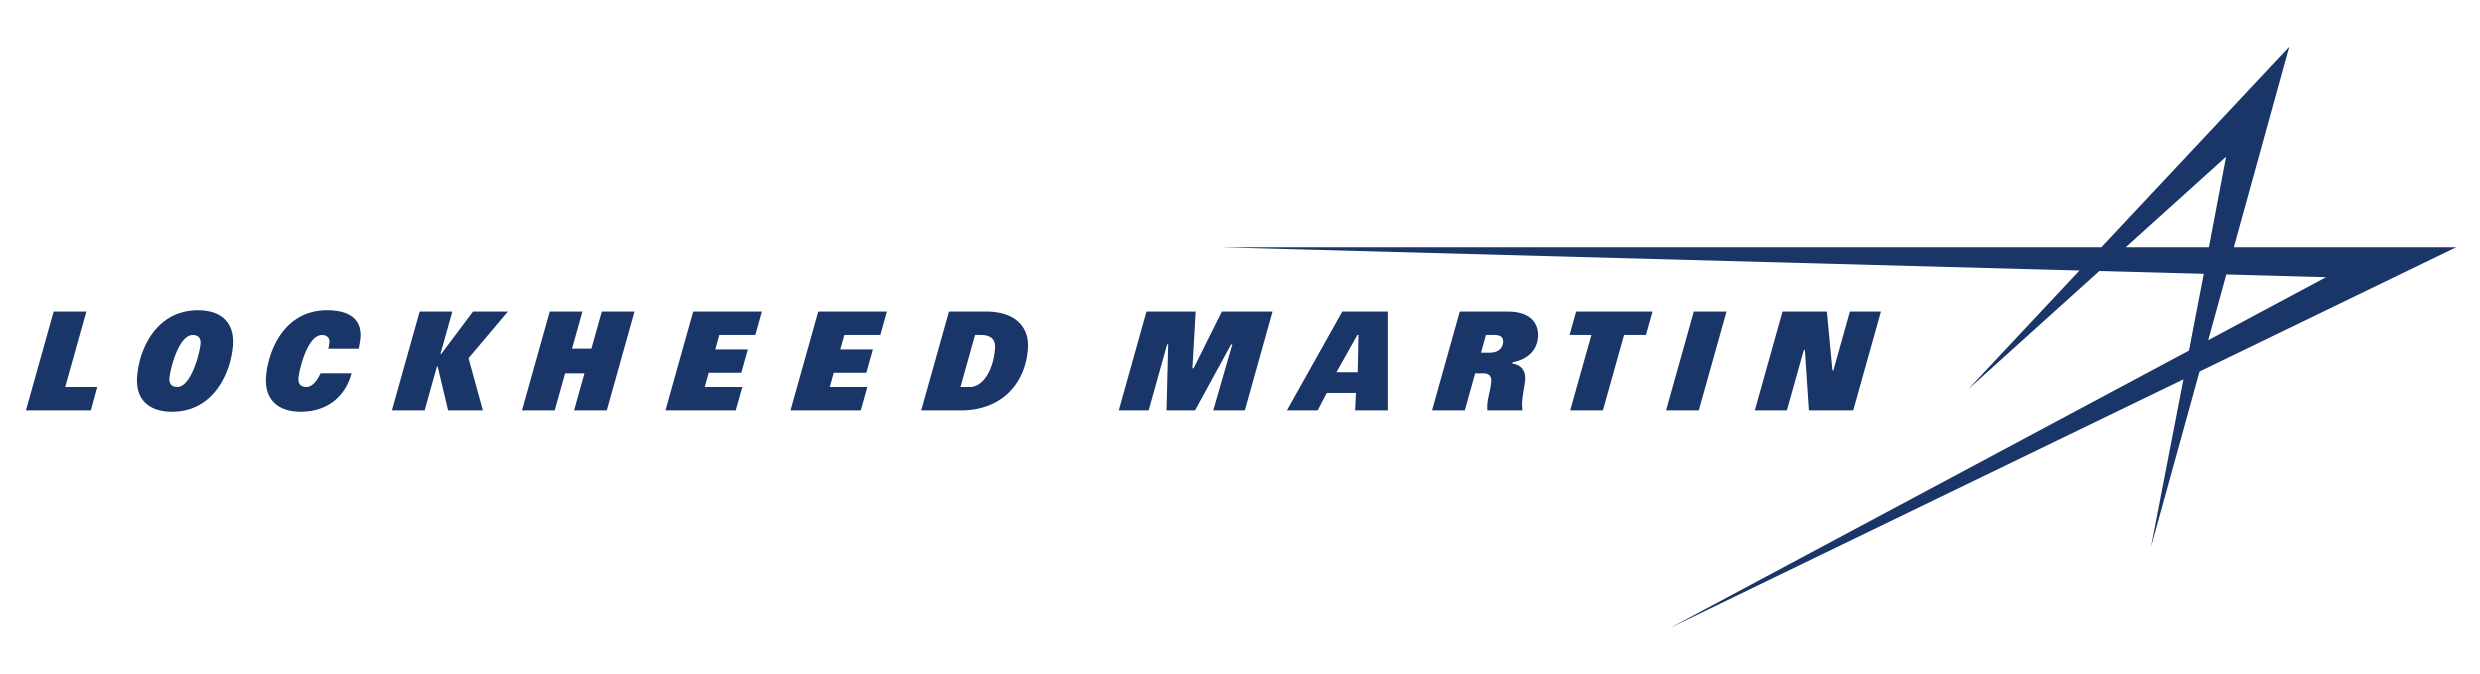 LockheedMartin_logo.png